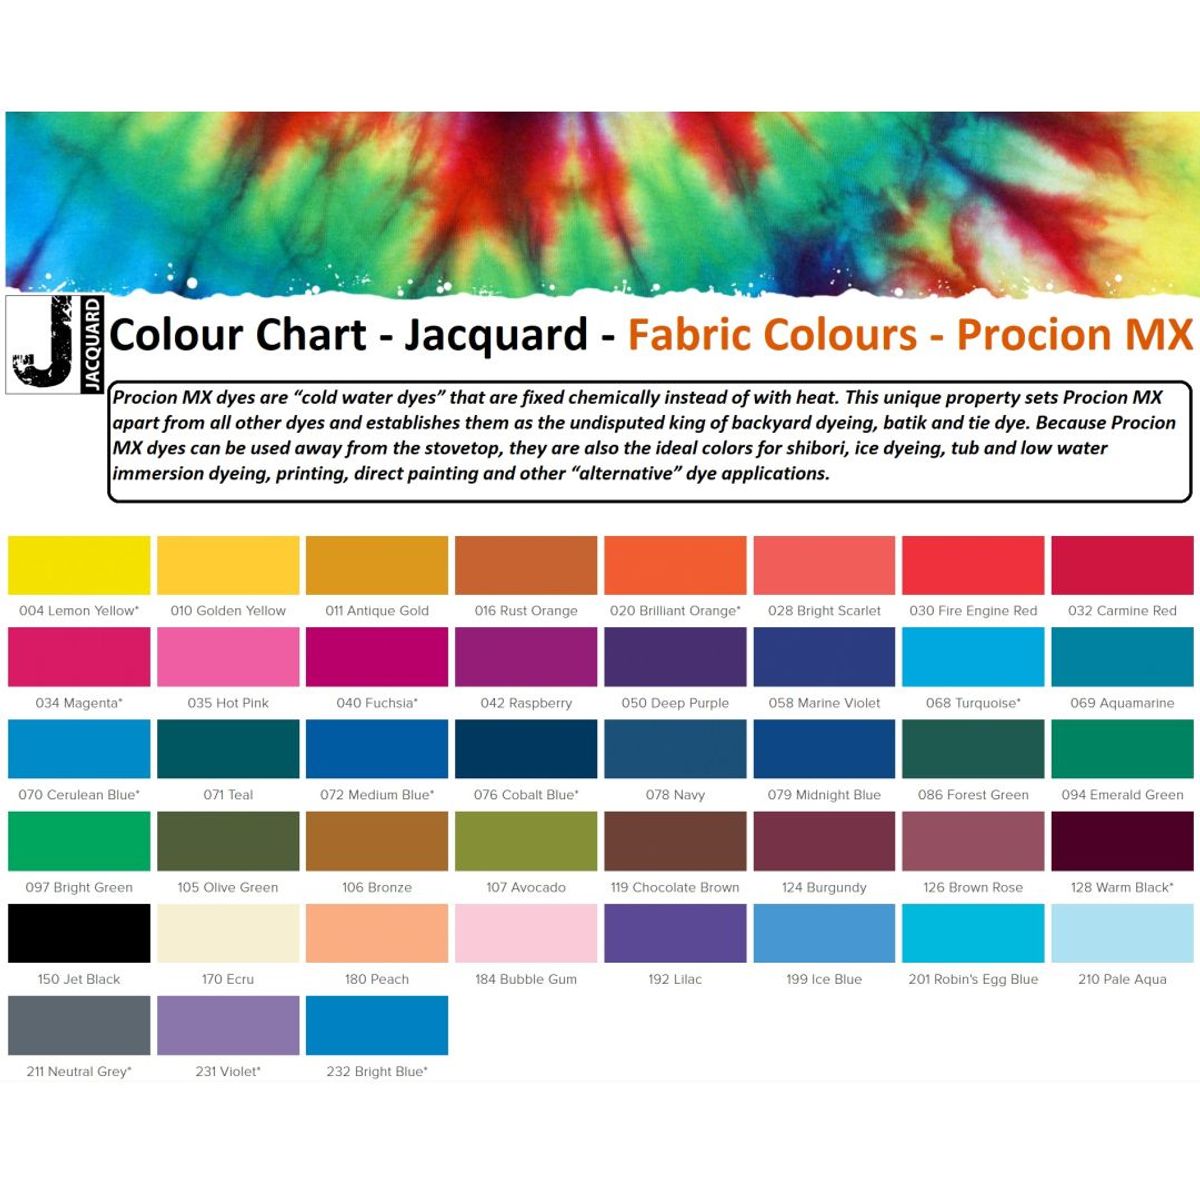 Jacquard - Procion MX Dye - Fabric Textile - Peach 180